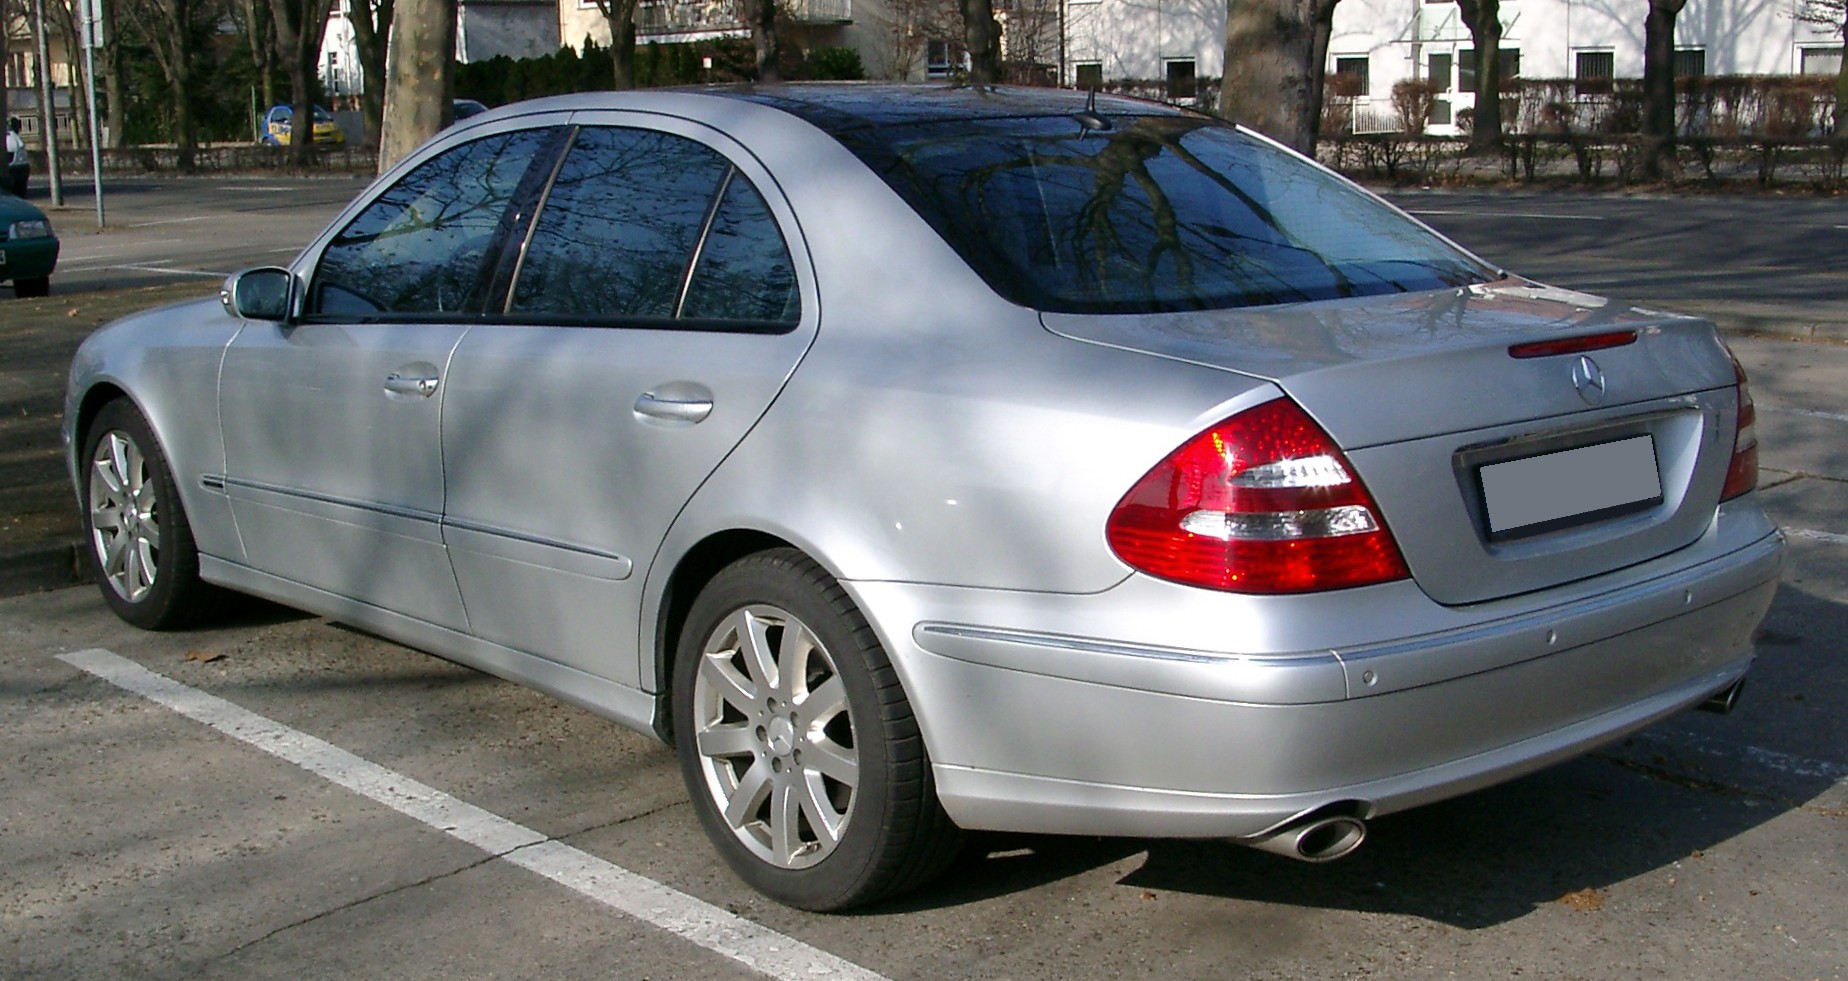 https://upload.wikimedia.org/wikipedia/commons/e/e3/Mercedes_W211_rear_20080213.jpg